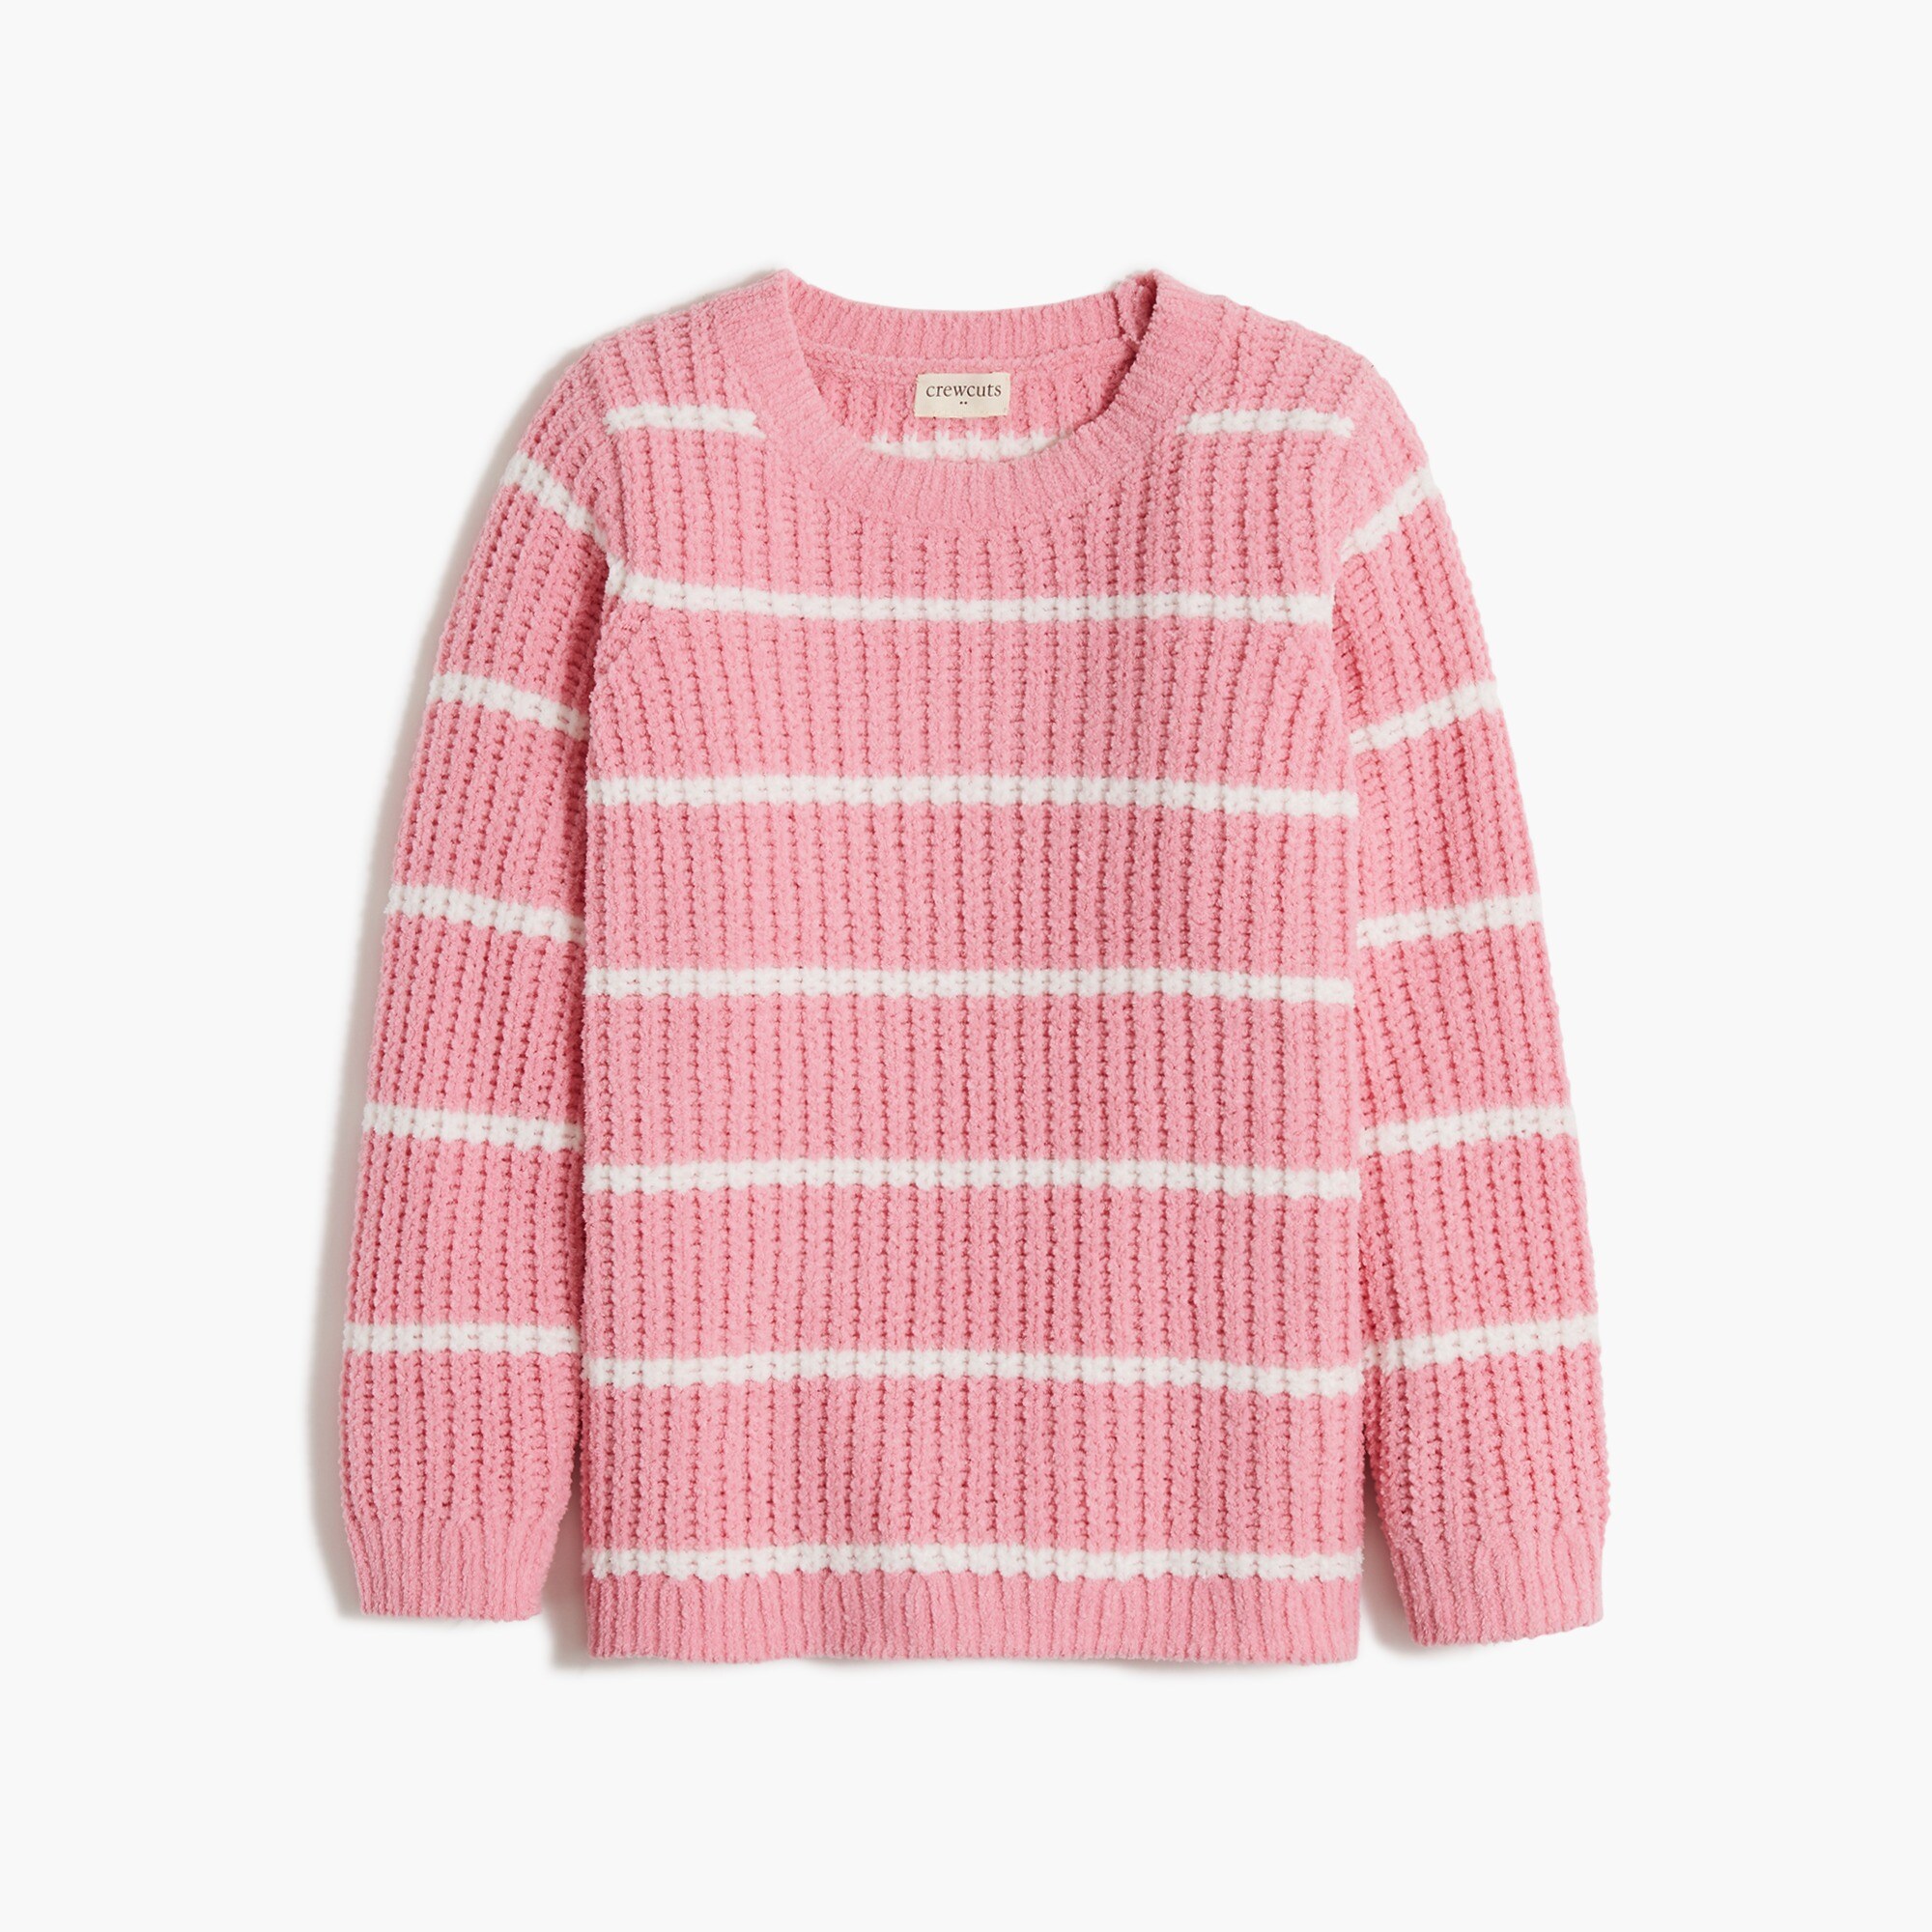  Girls' chenille striped sweater